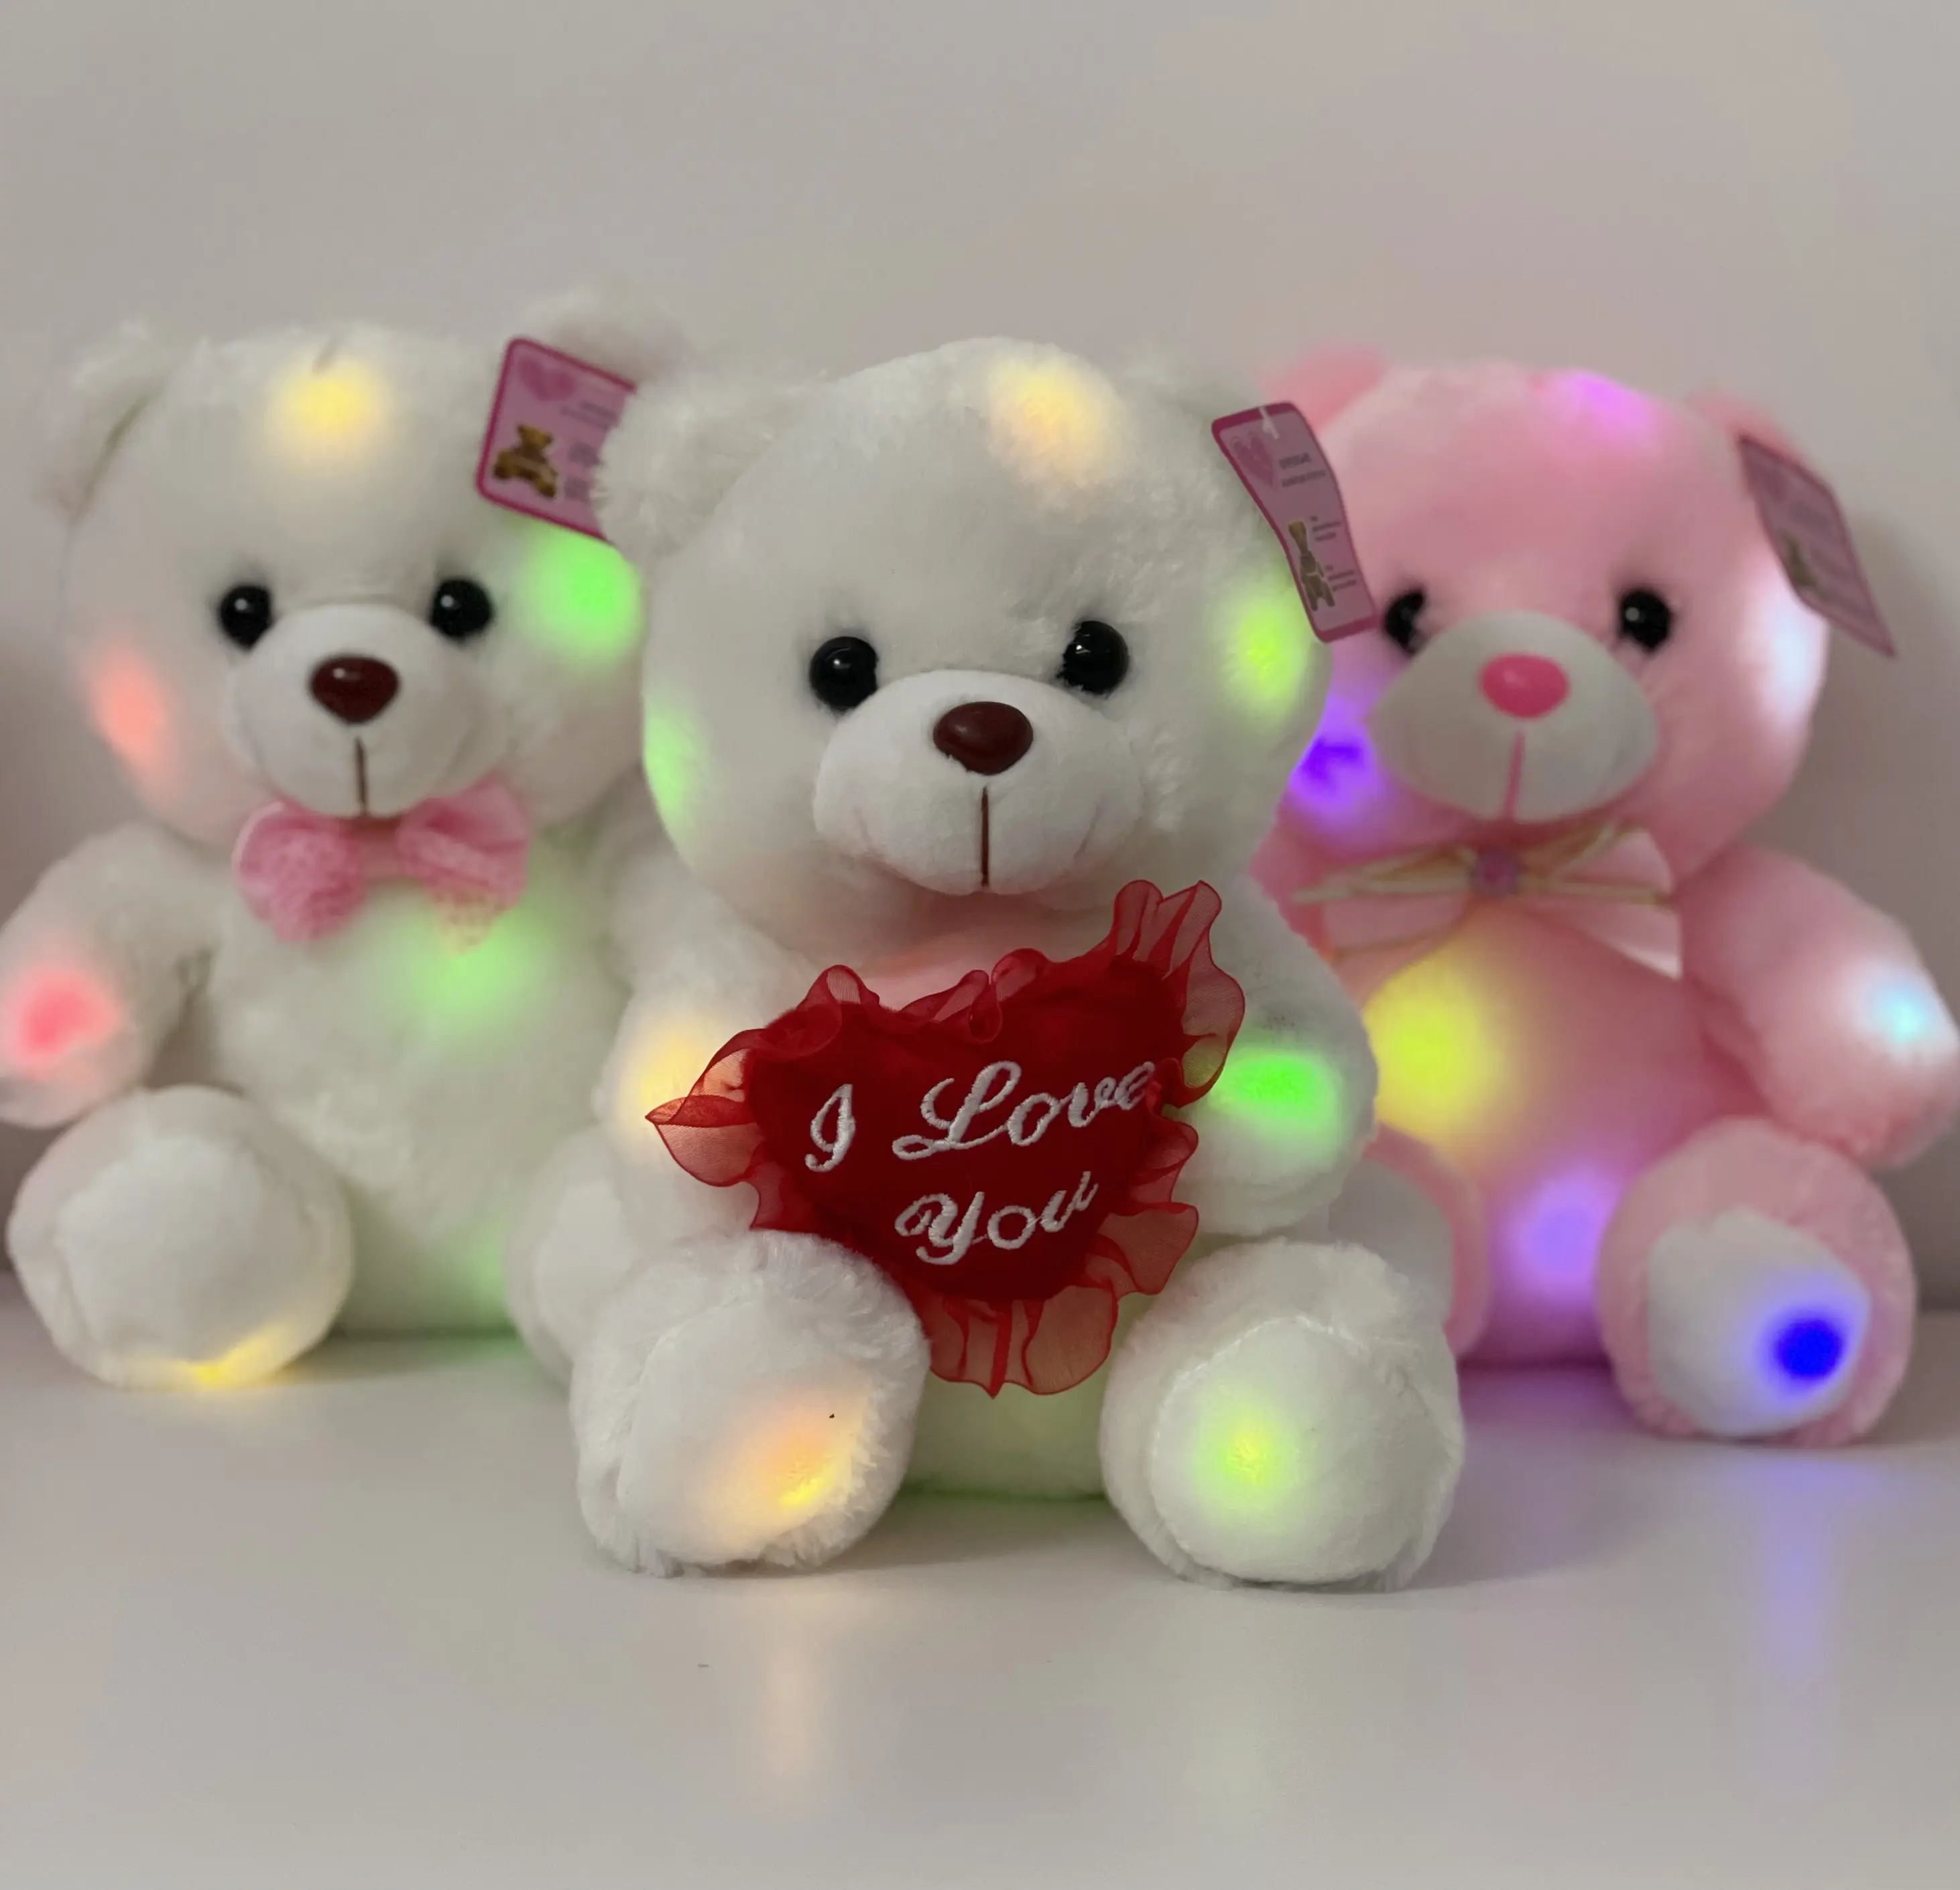 20cm sitting bear i love you teddy bear light up plush toys stuffed valentines teddy bears wholesale with soft pink heart